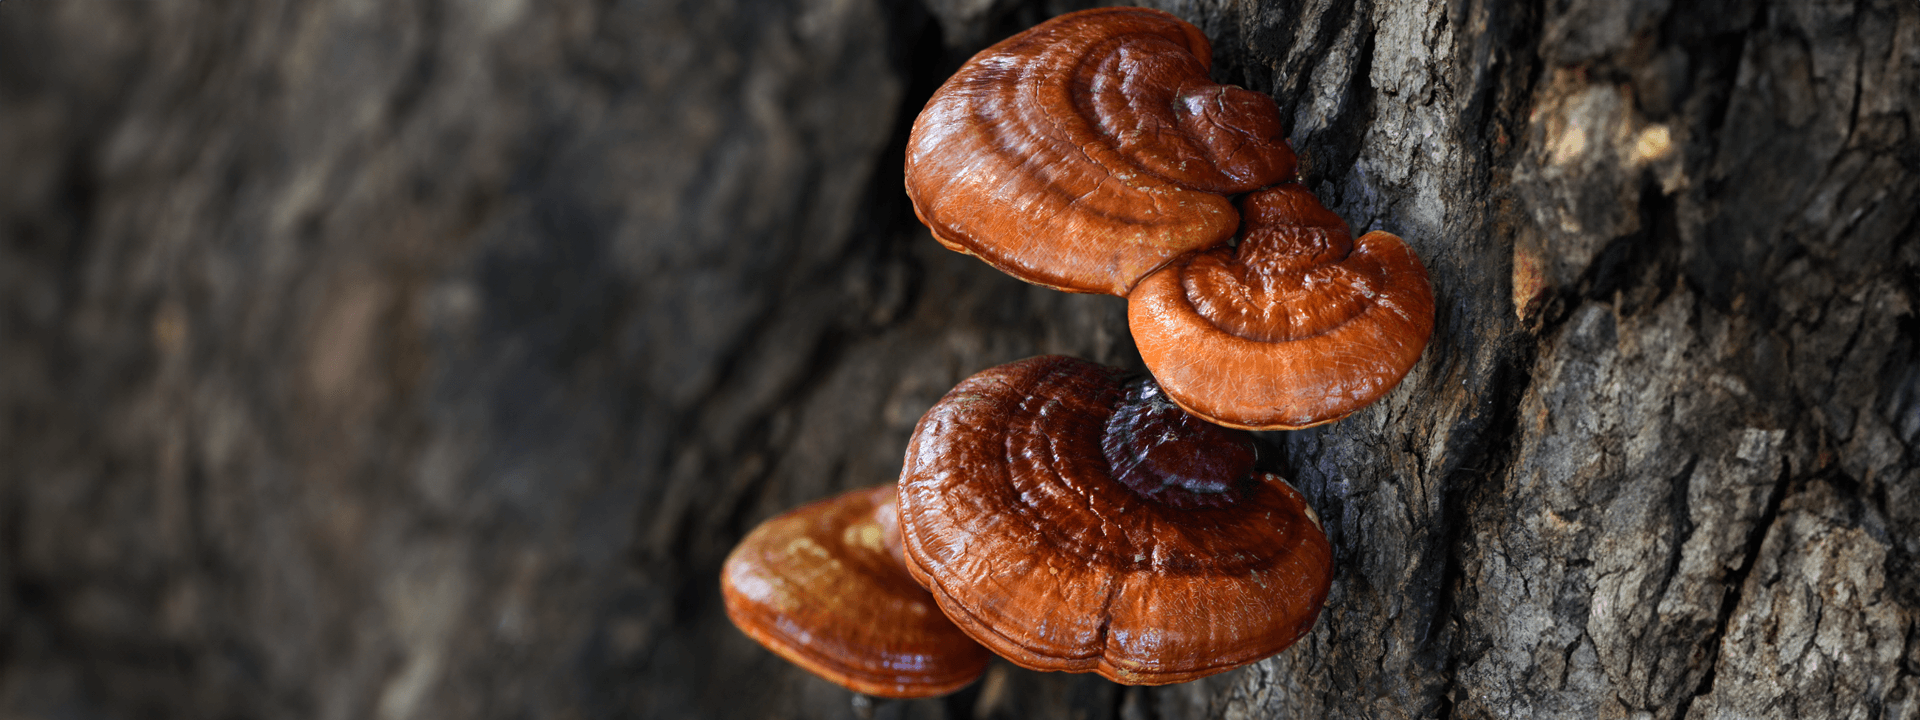 Mushrooms 'Helps Keep Fat Off'